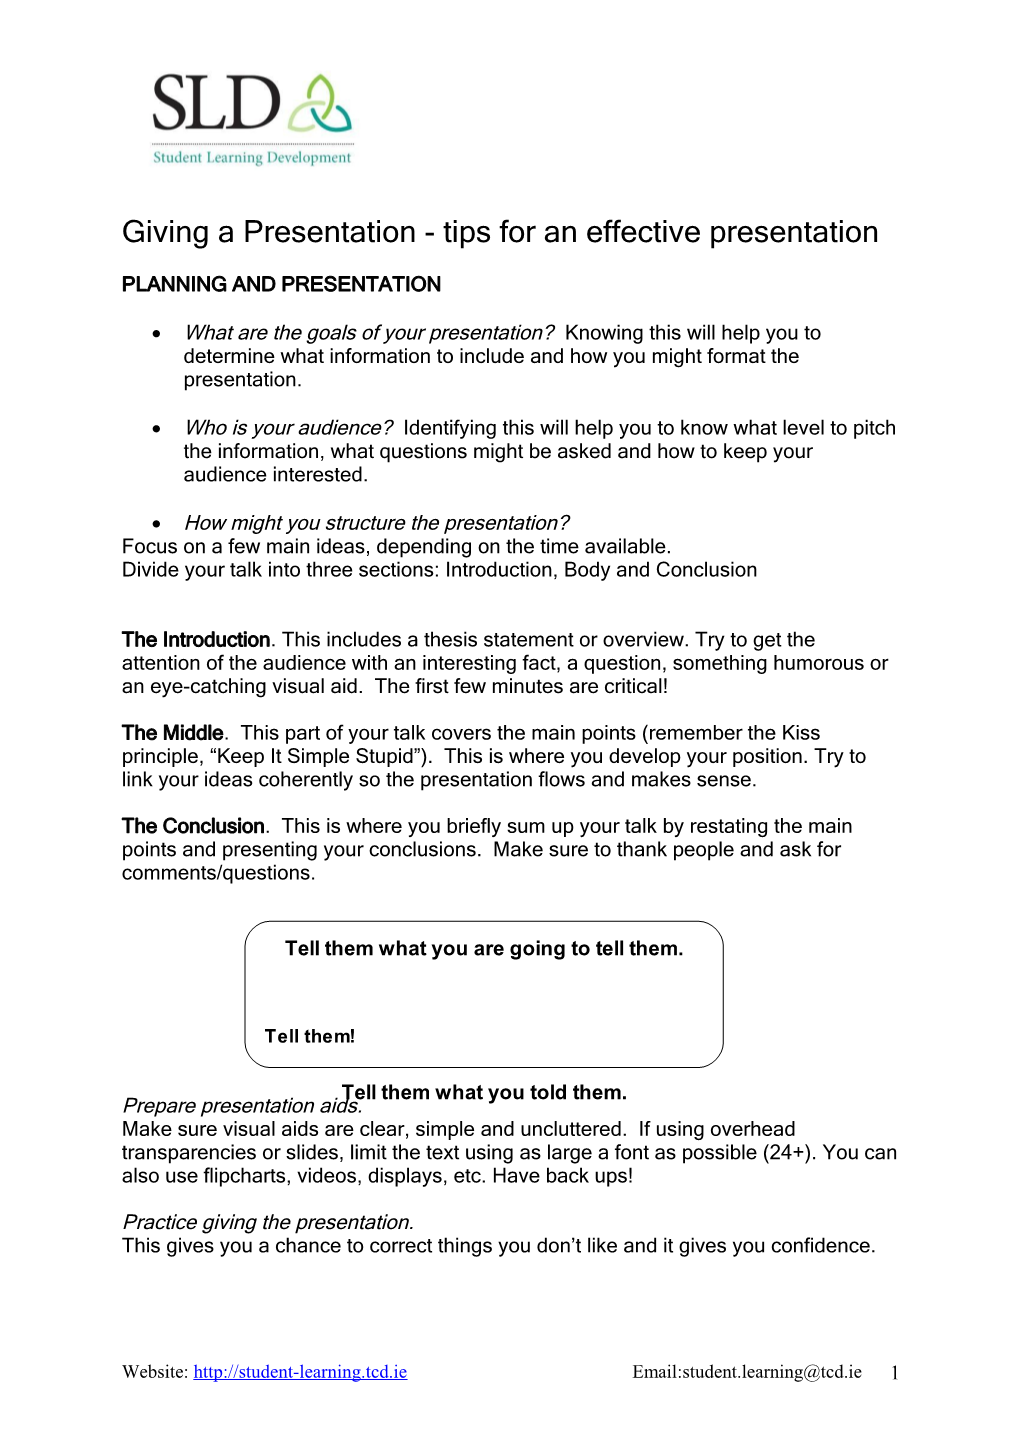 Giving a Presentation - Tips for an Effective Presentation